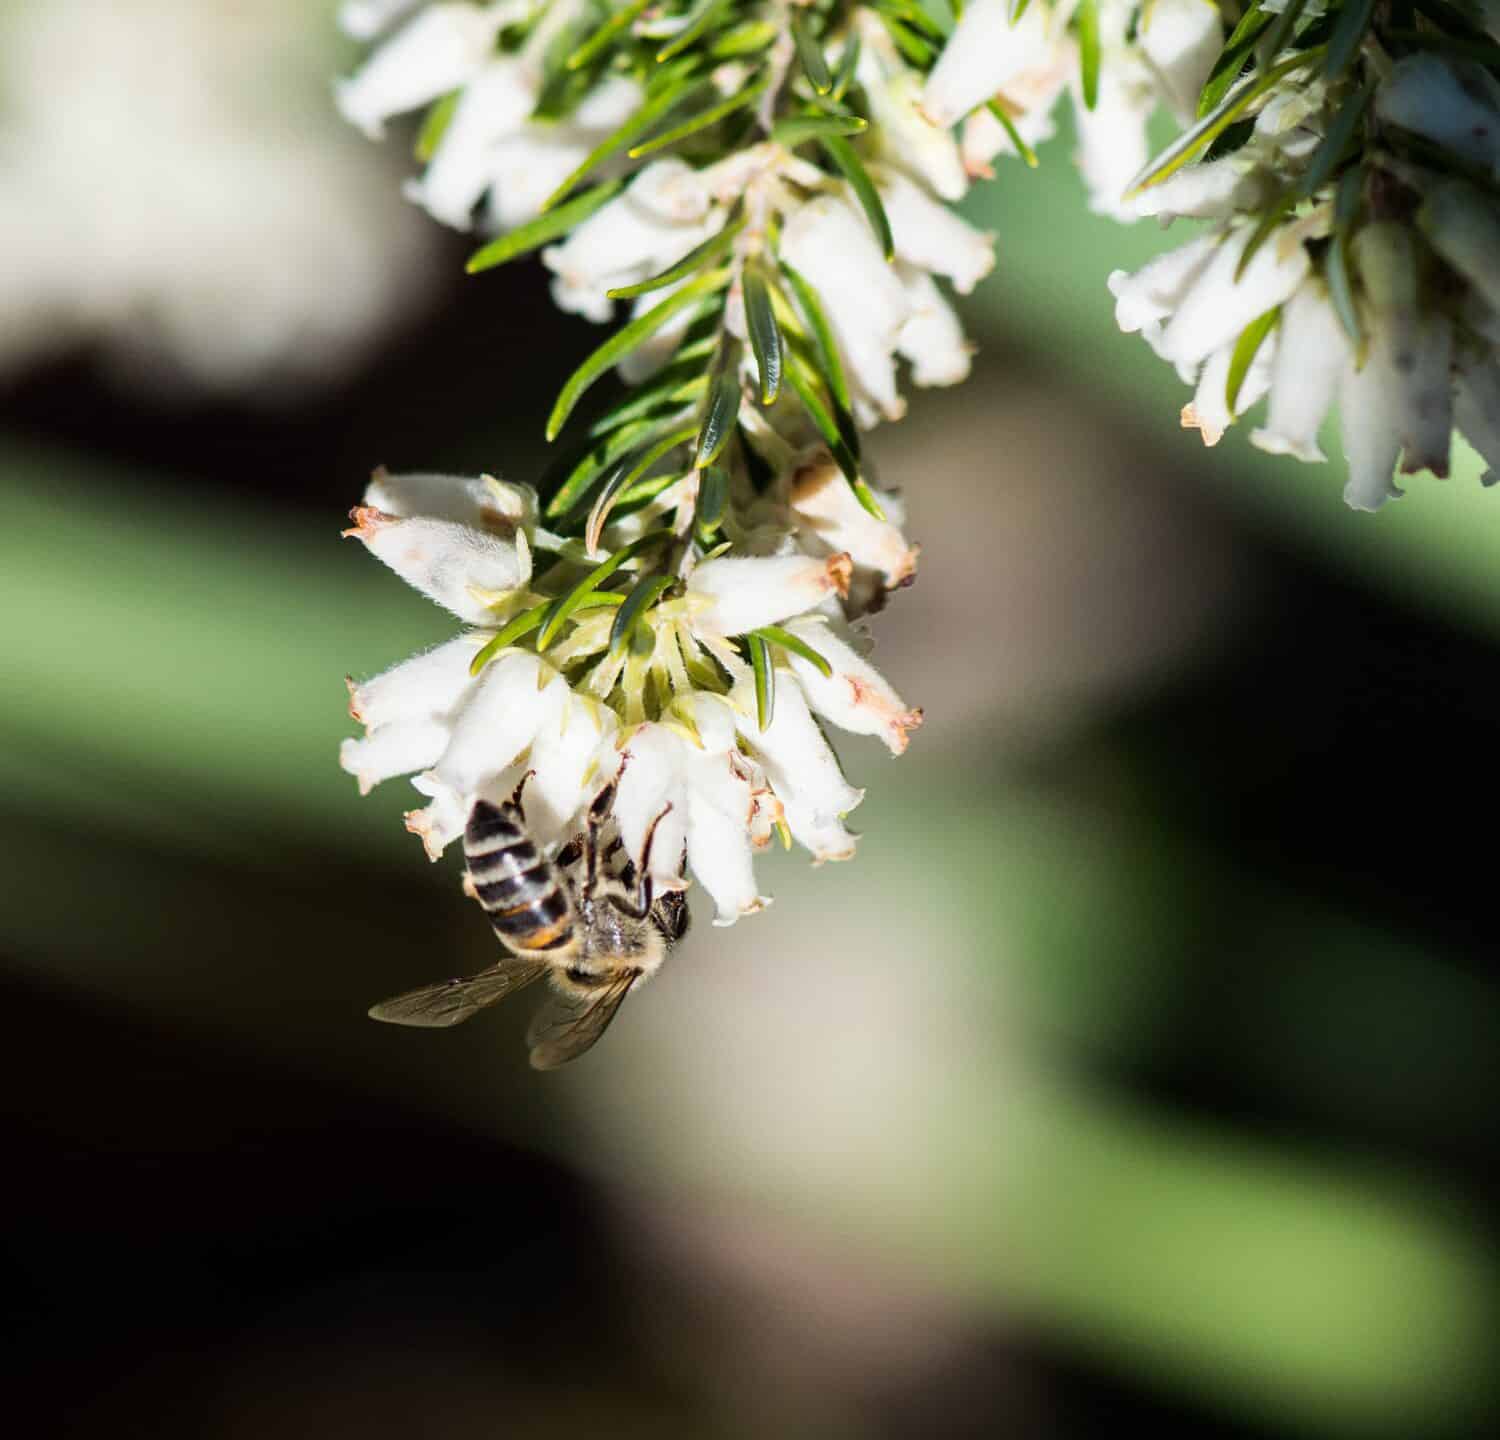 Cape Honey bee on Erica lutea in the Harold Porter Botanical Garden, Betty's Bay, South Africa